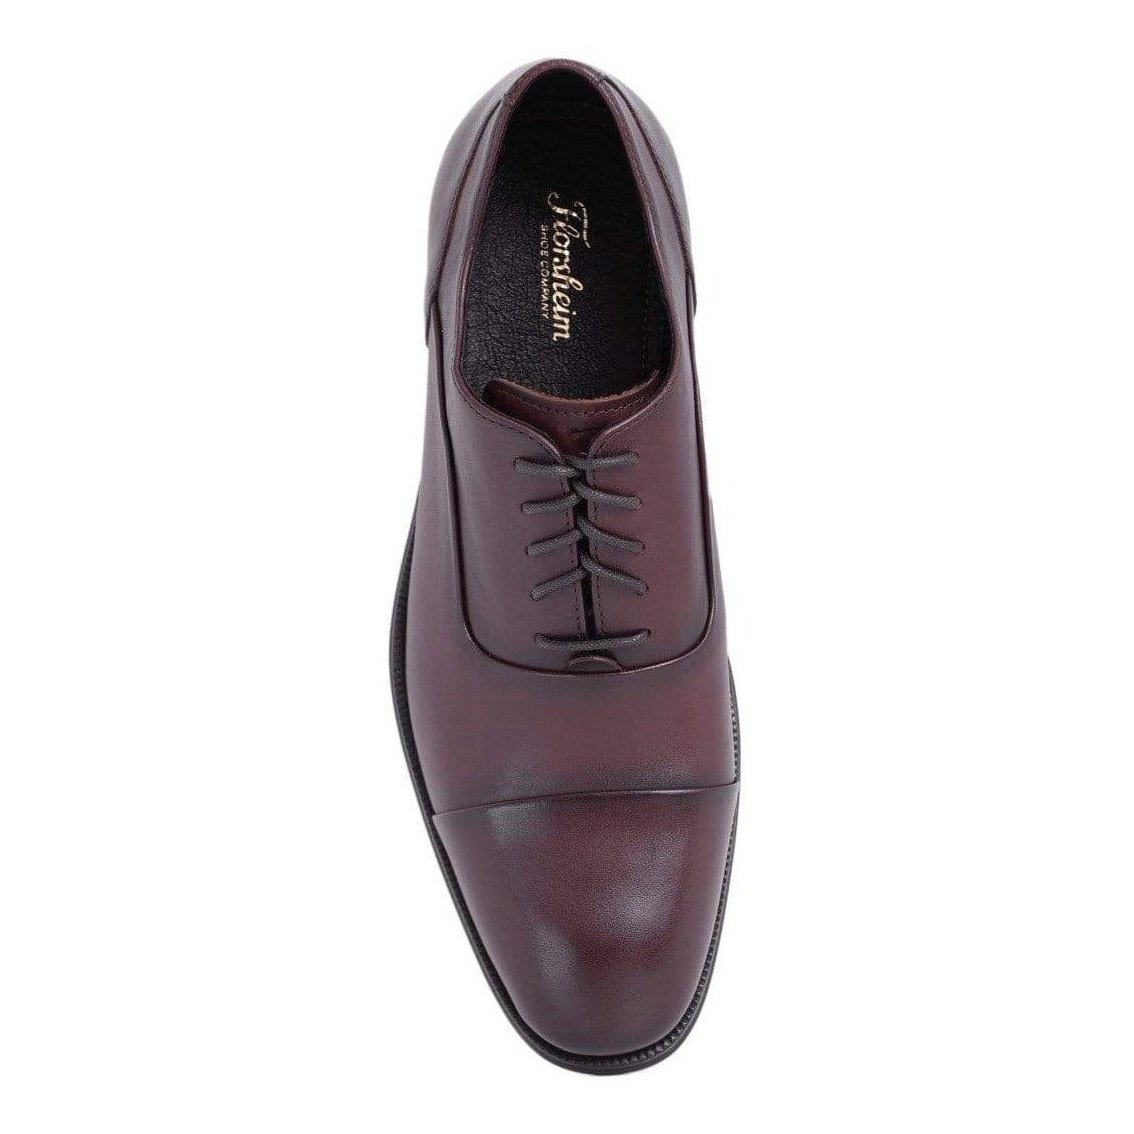 Florsheim SHOES Florsheim Solid Dark Brown Cap Toe Oxford Leather Dress Shoes